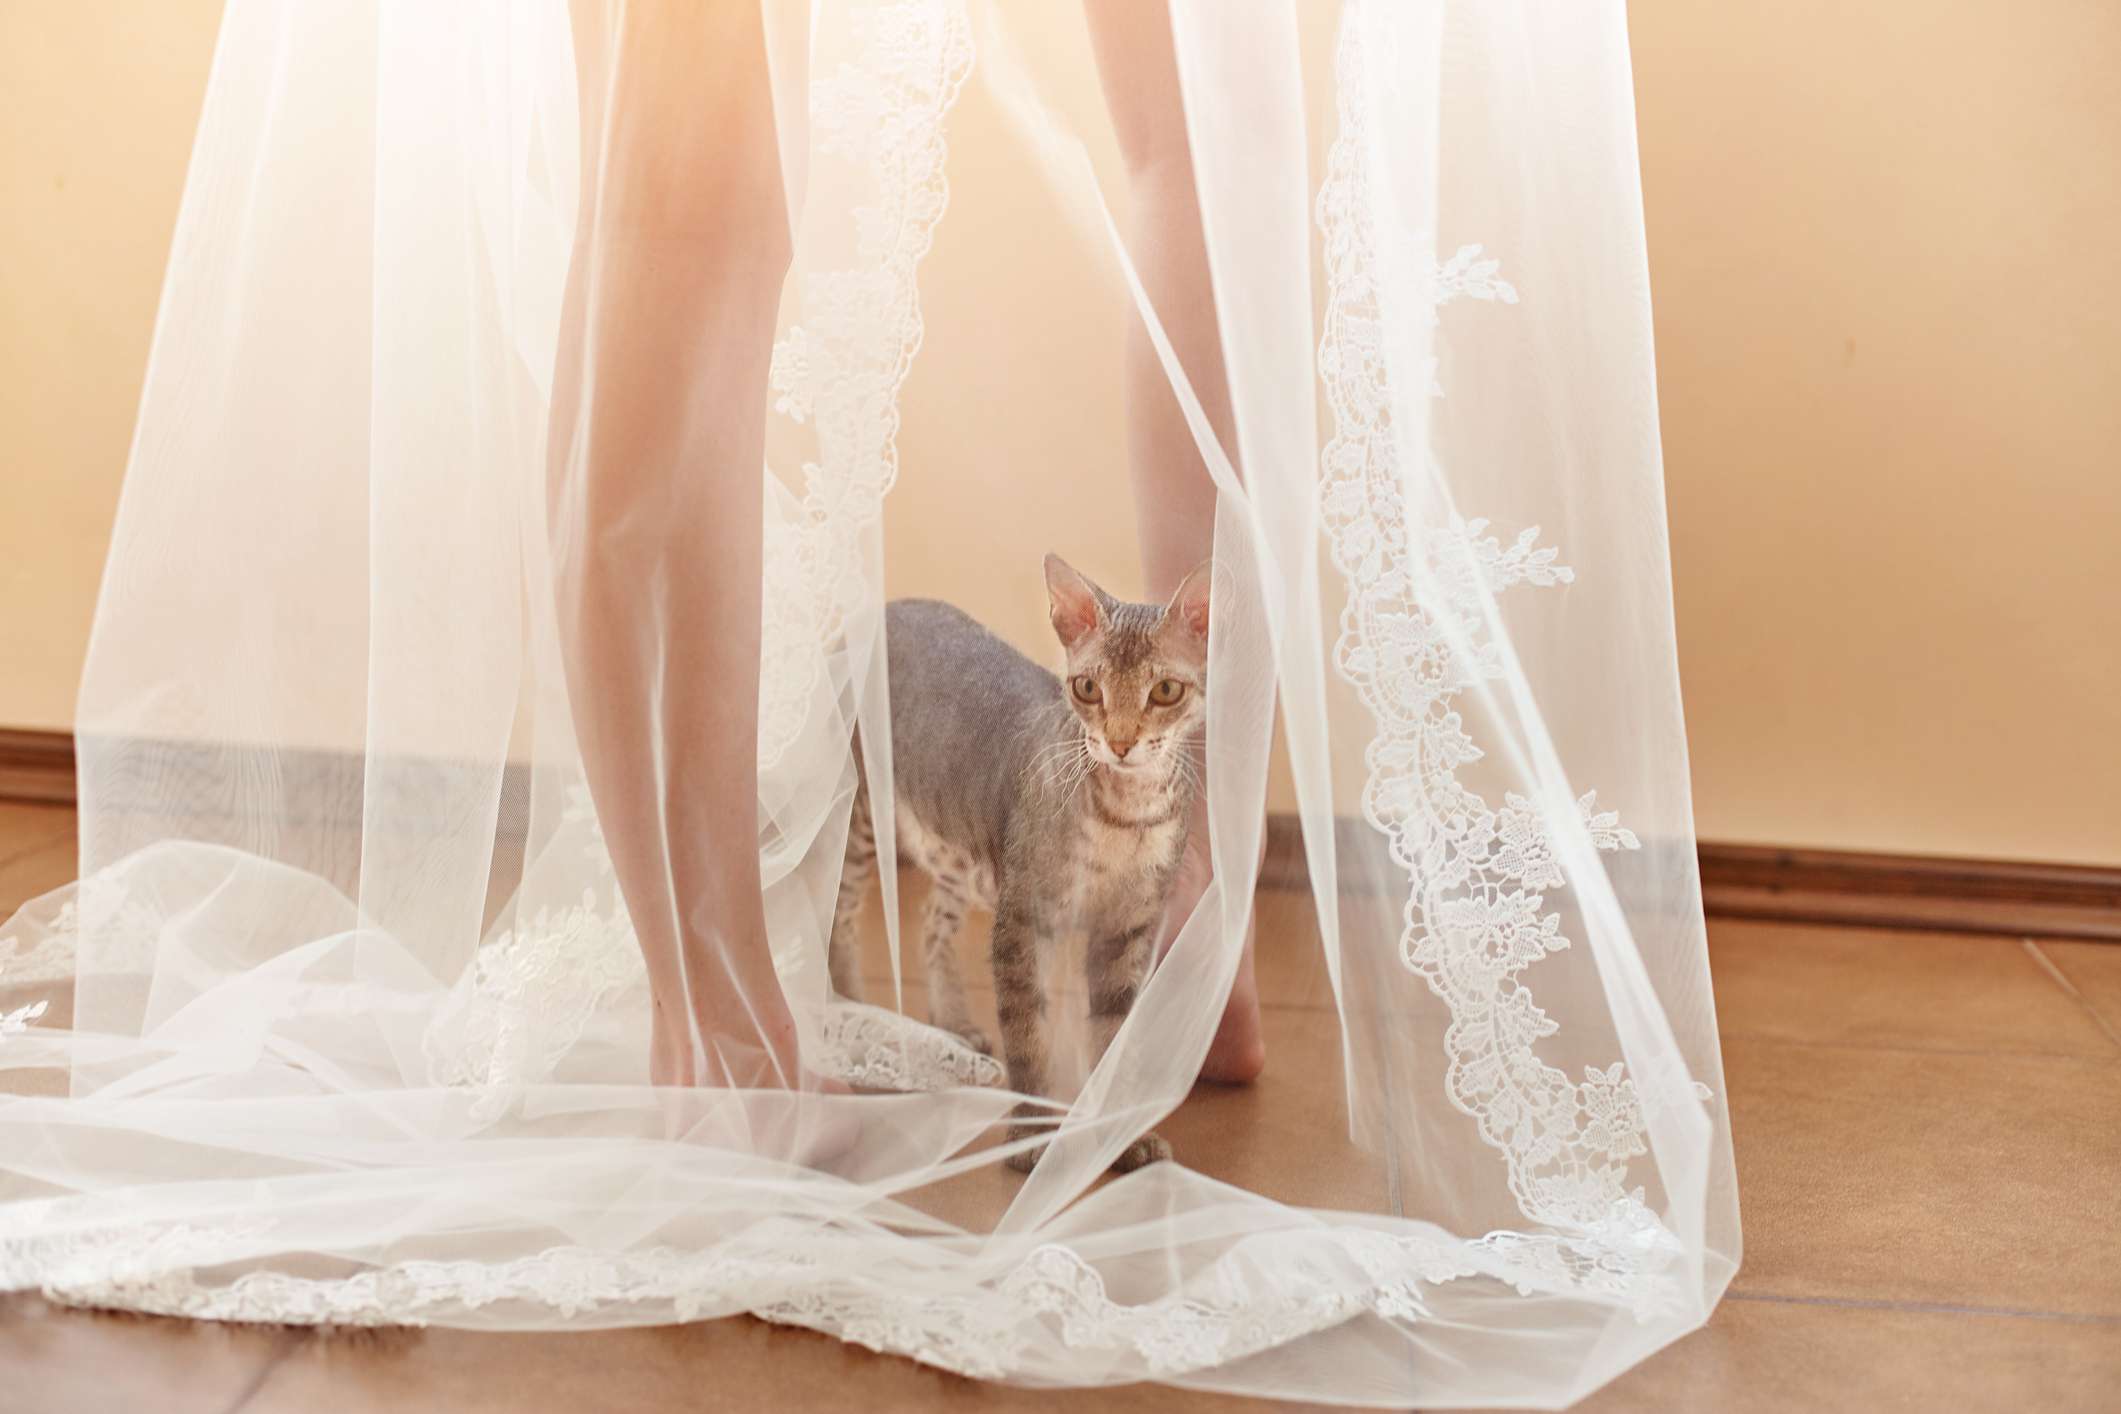 A small Minskin cat at a woman's feet underneath a sheer dress.